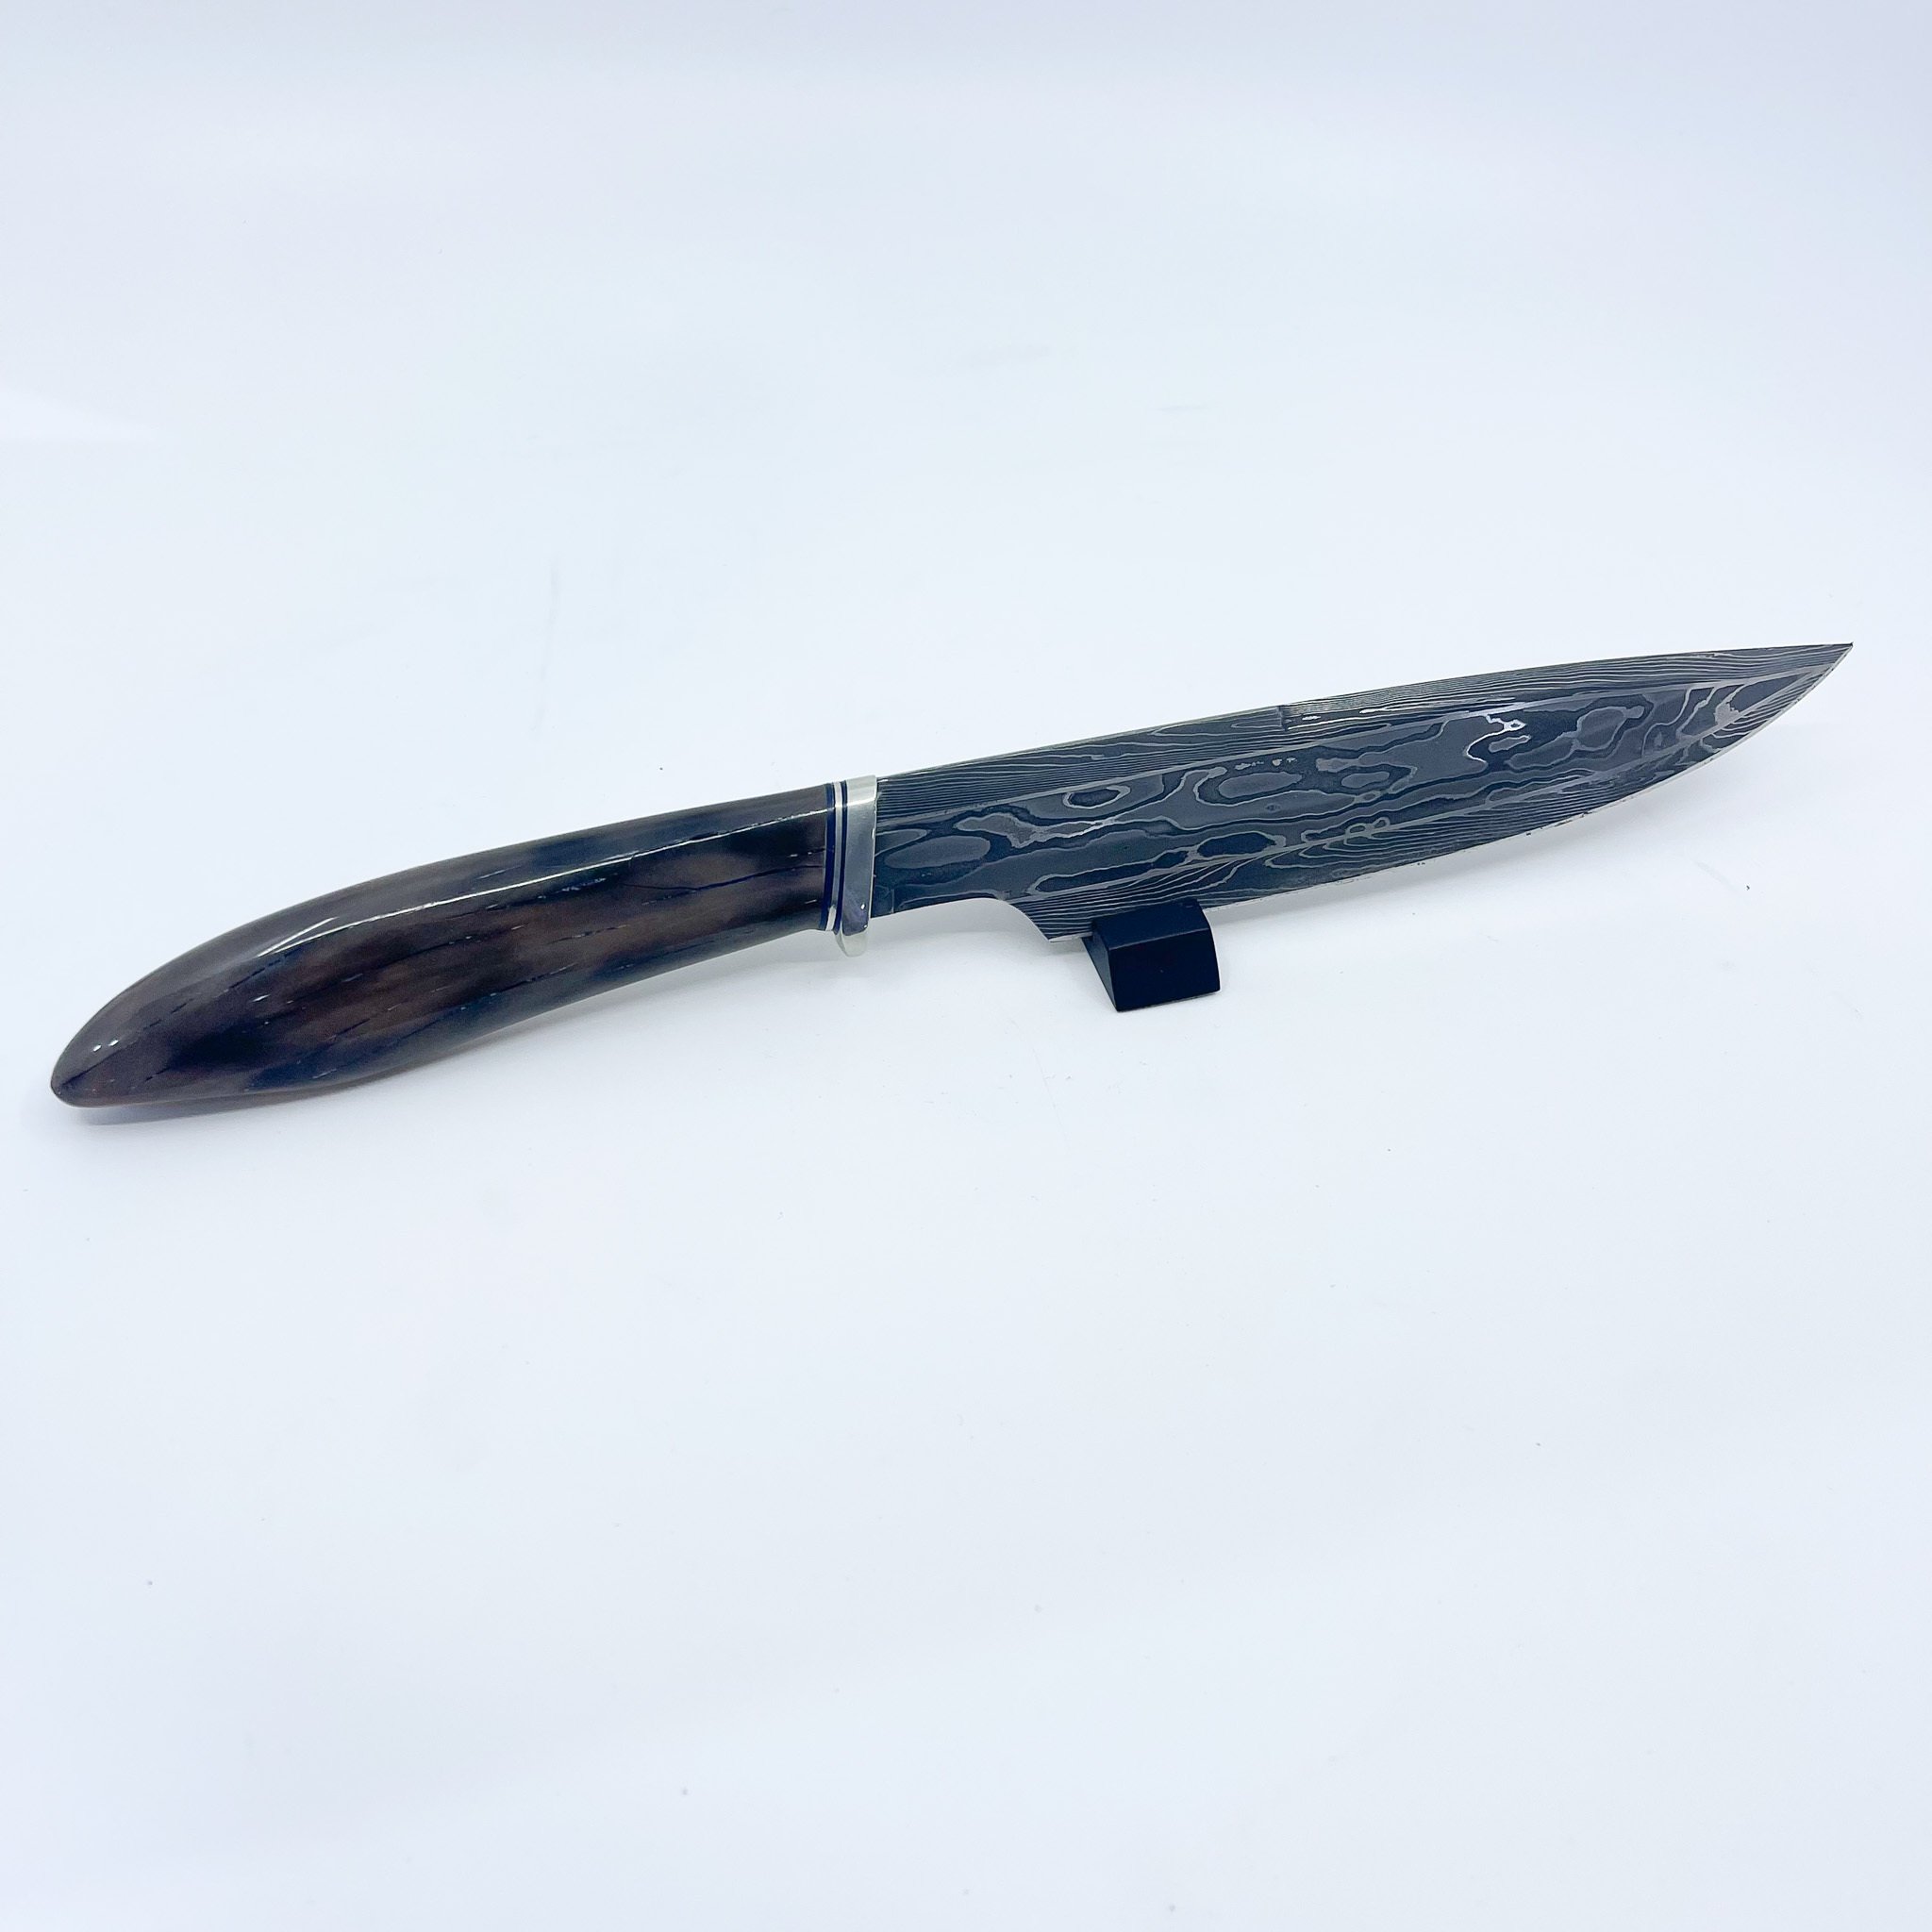 Damascus Steel Knife with Sheath